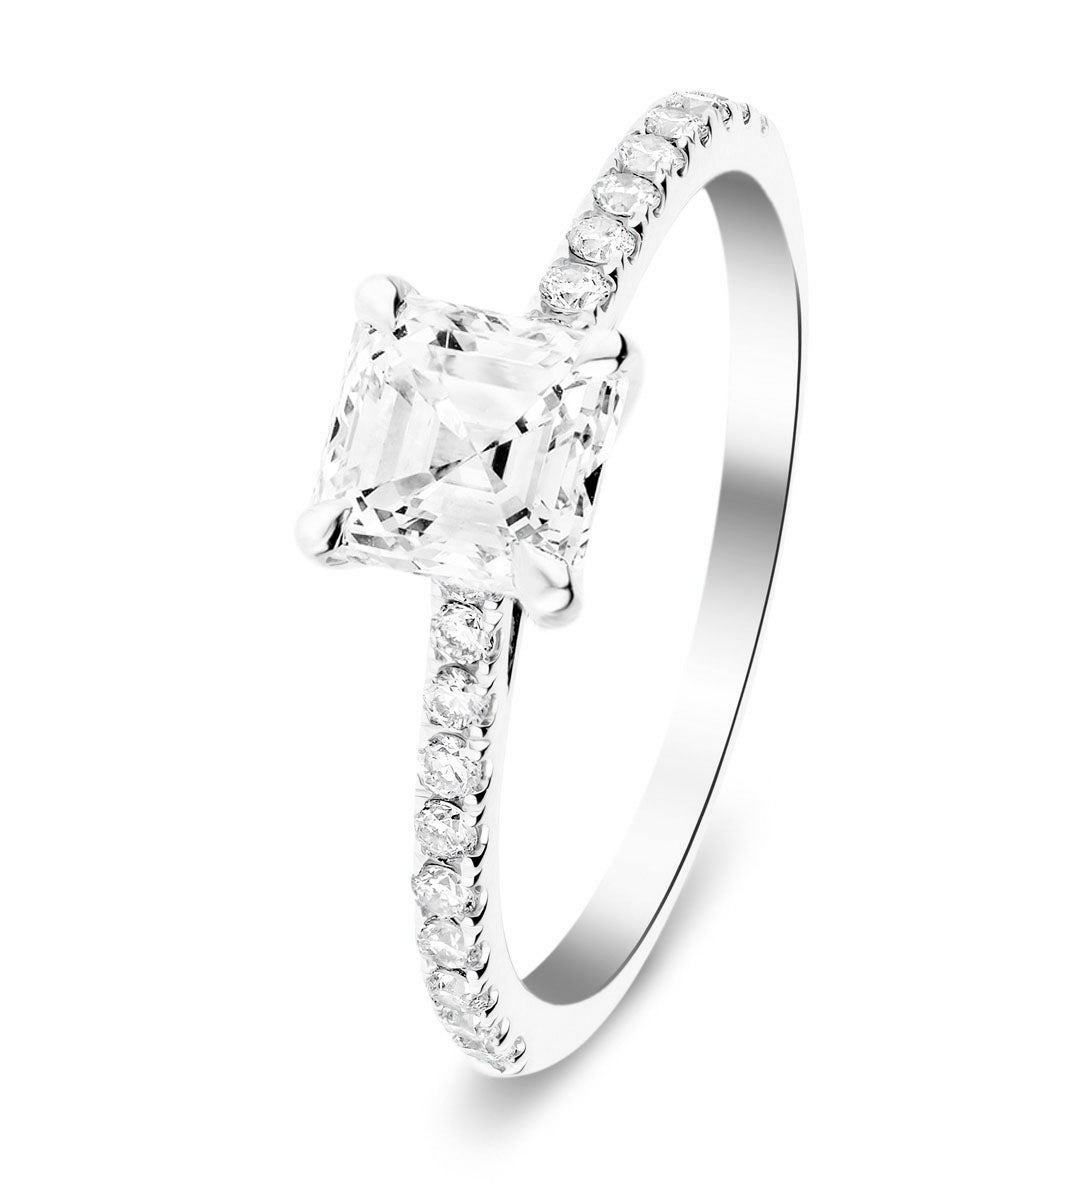 Asscher Cut Diamond Side Stone Engagement Ring 1.30ct E/VS in 18k White Gold - All Diamond